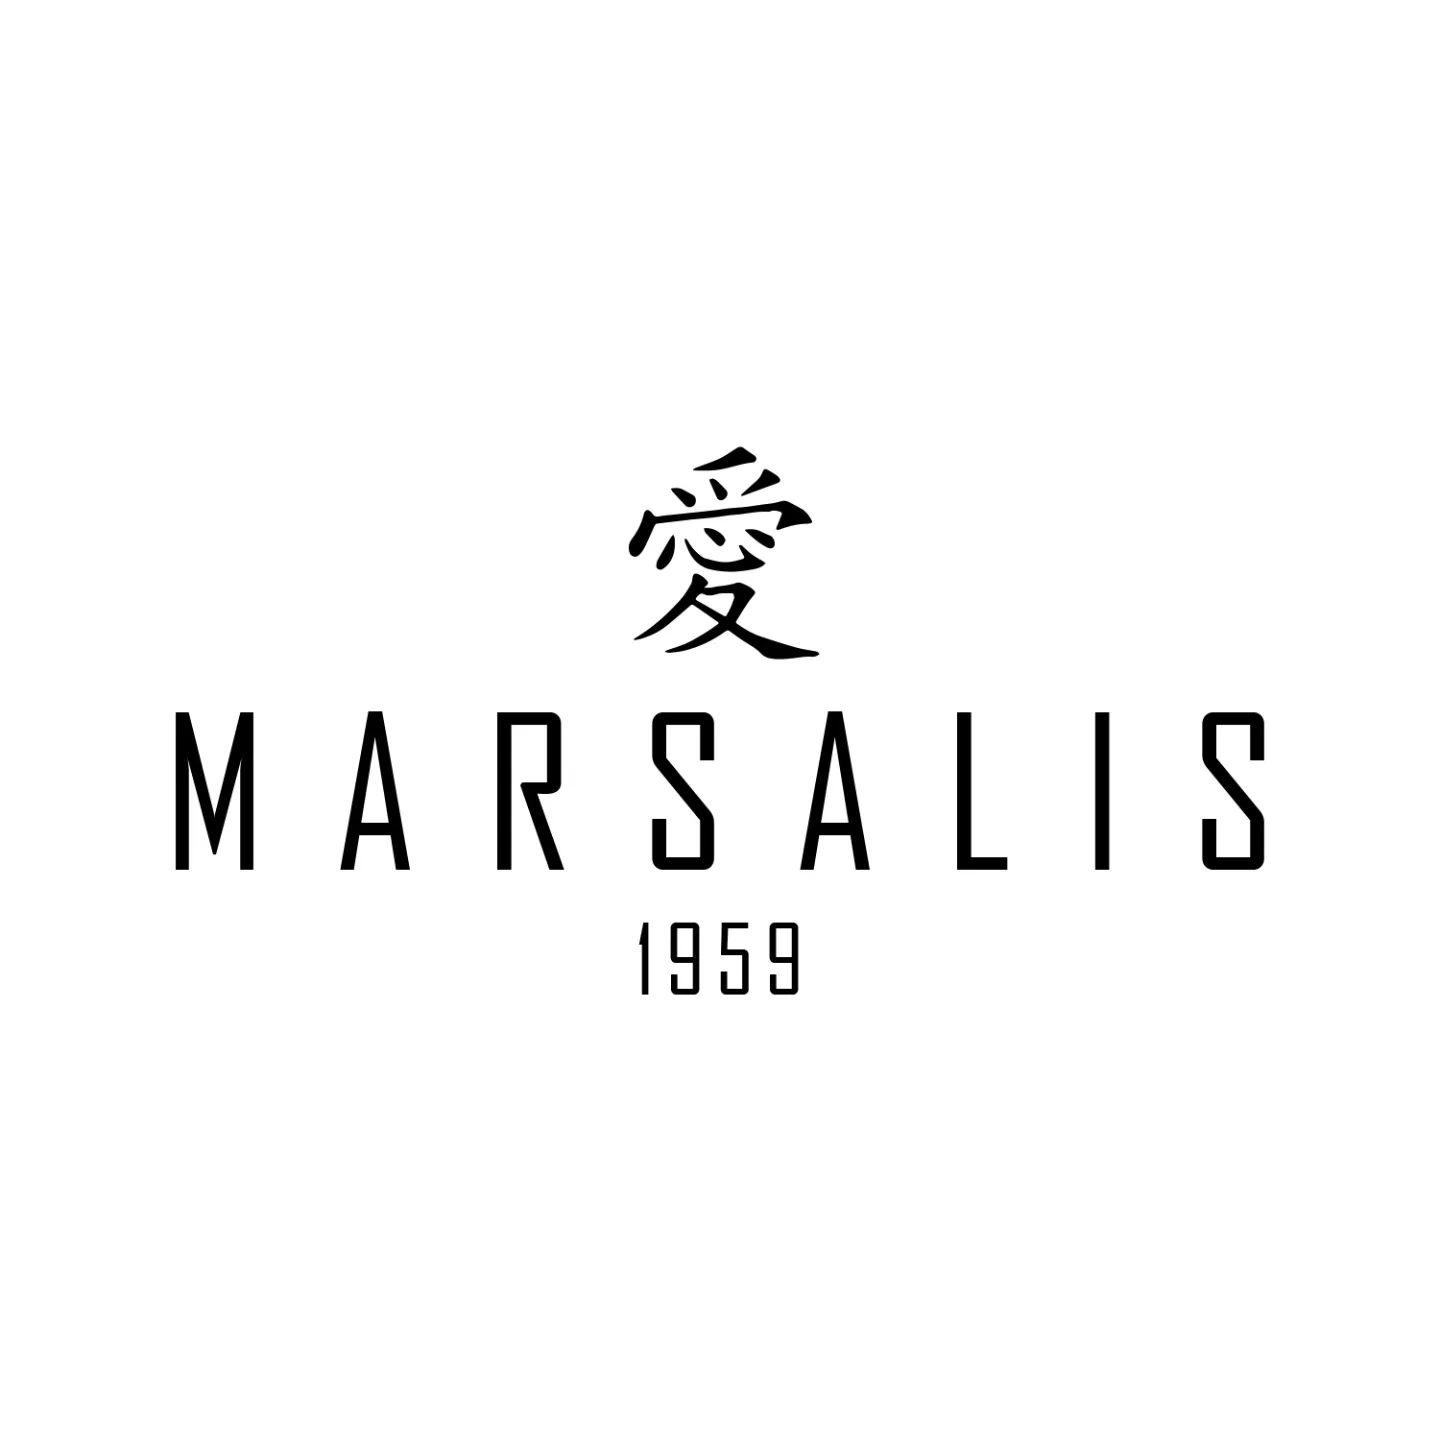 Marsalis 1959